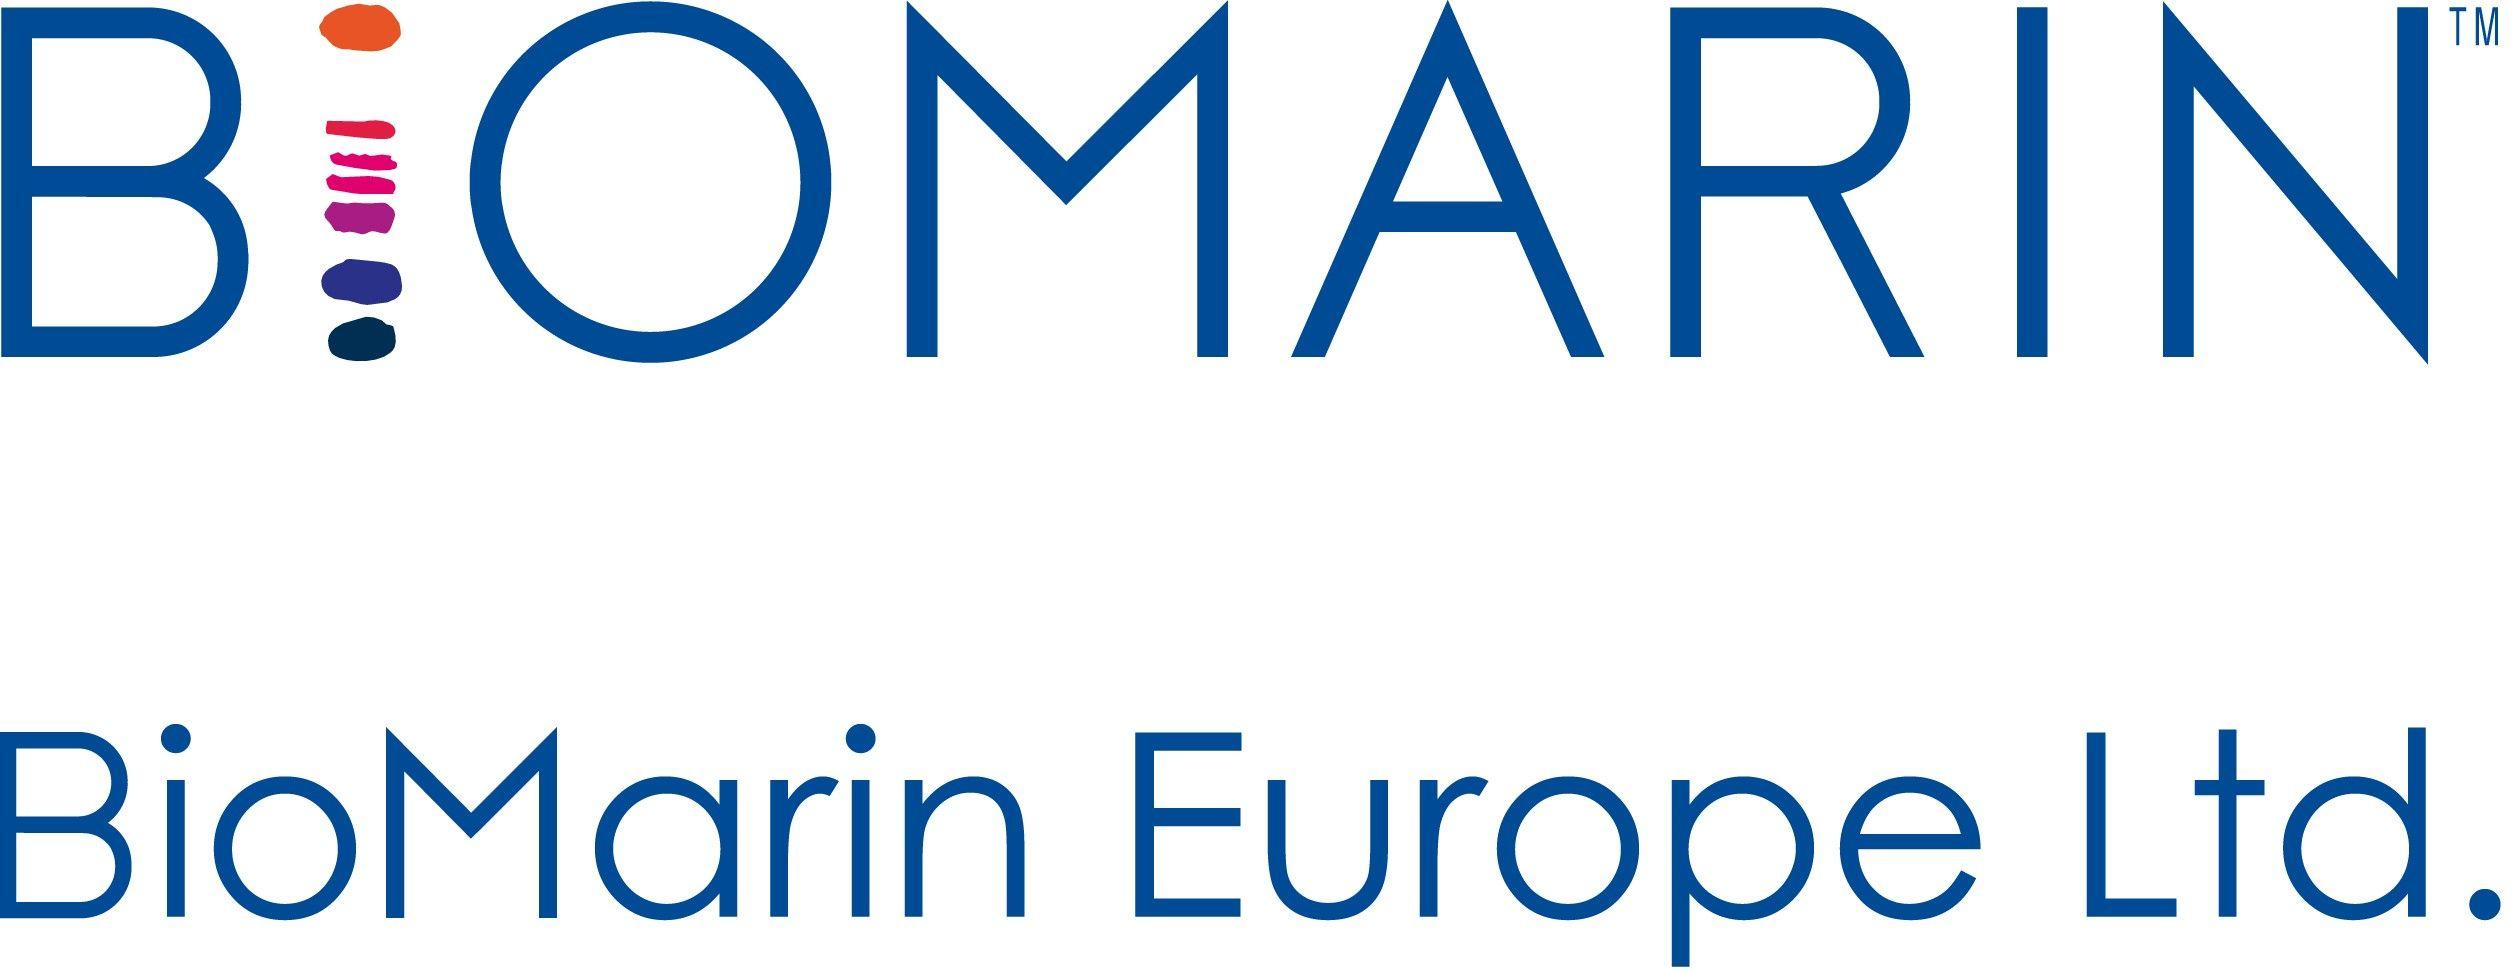 BioMarin Logo - BioMarin_Europe_logo4c150dpi_RGB - ECRD 2020 : The European ...